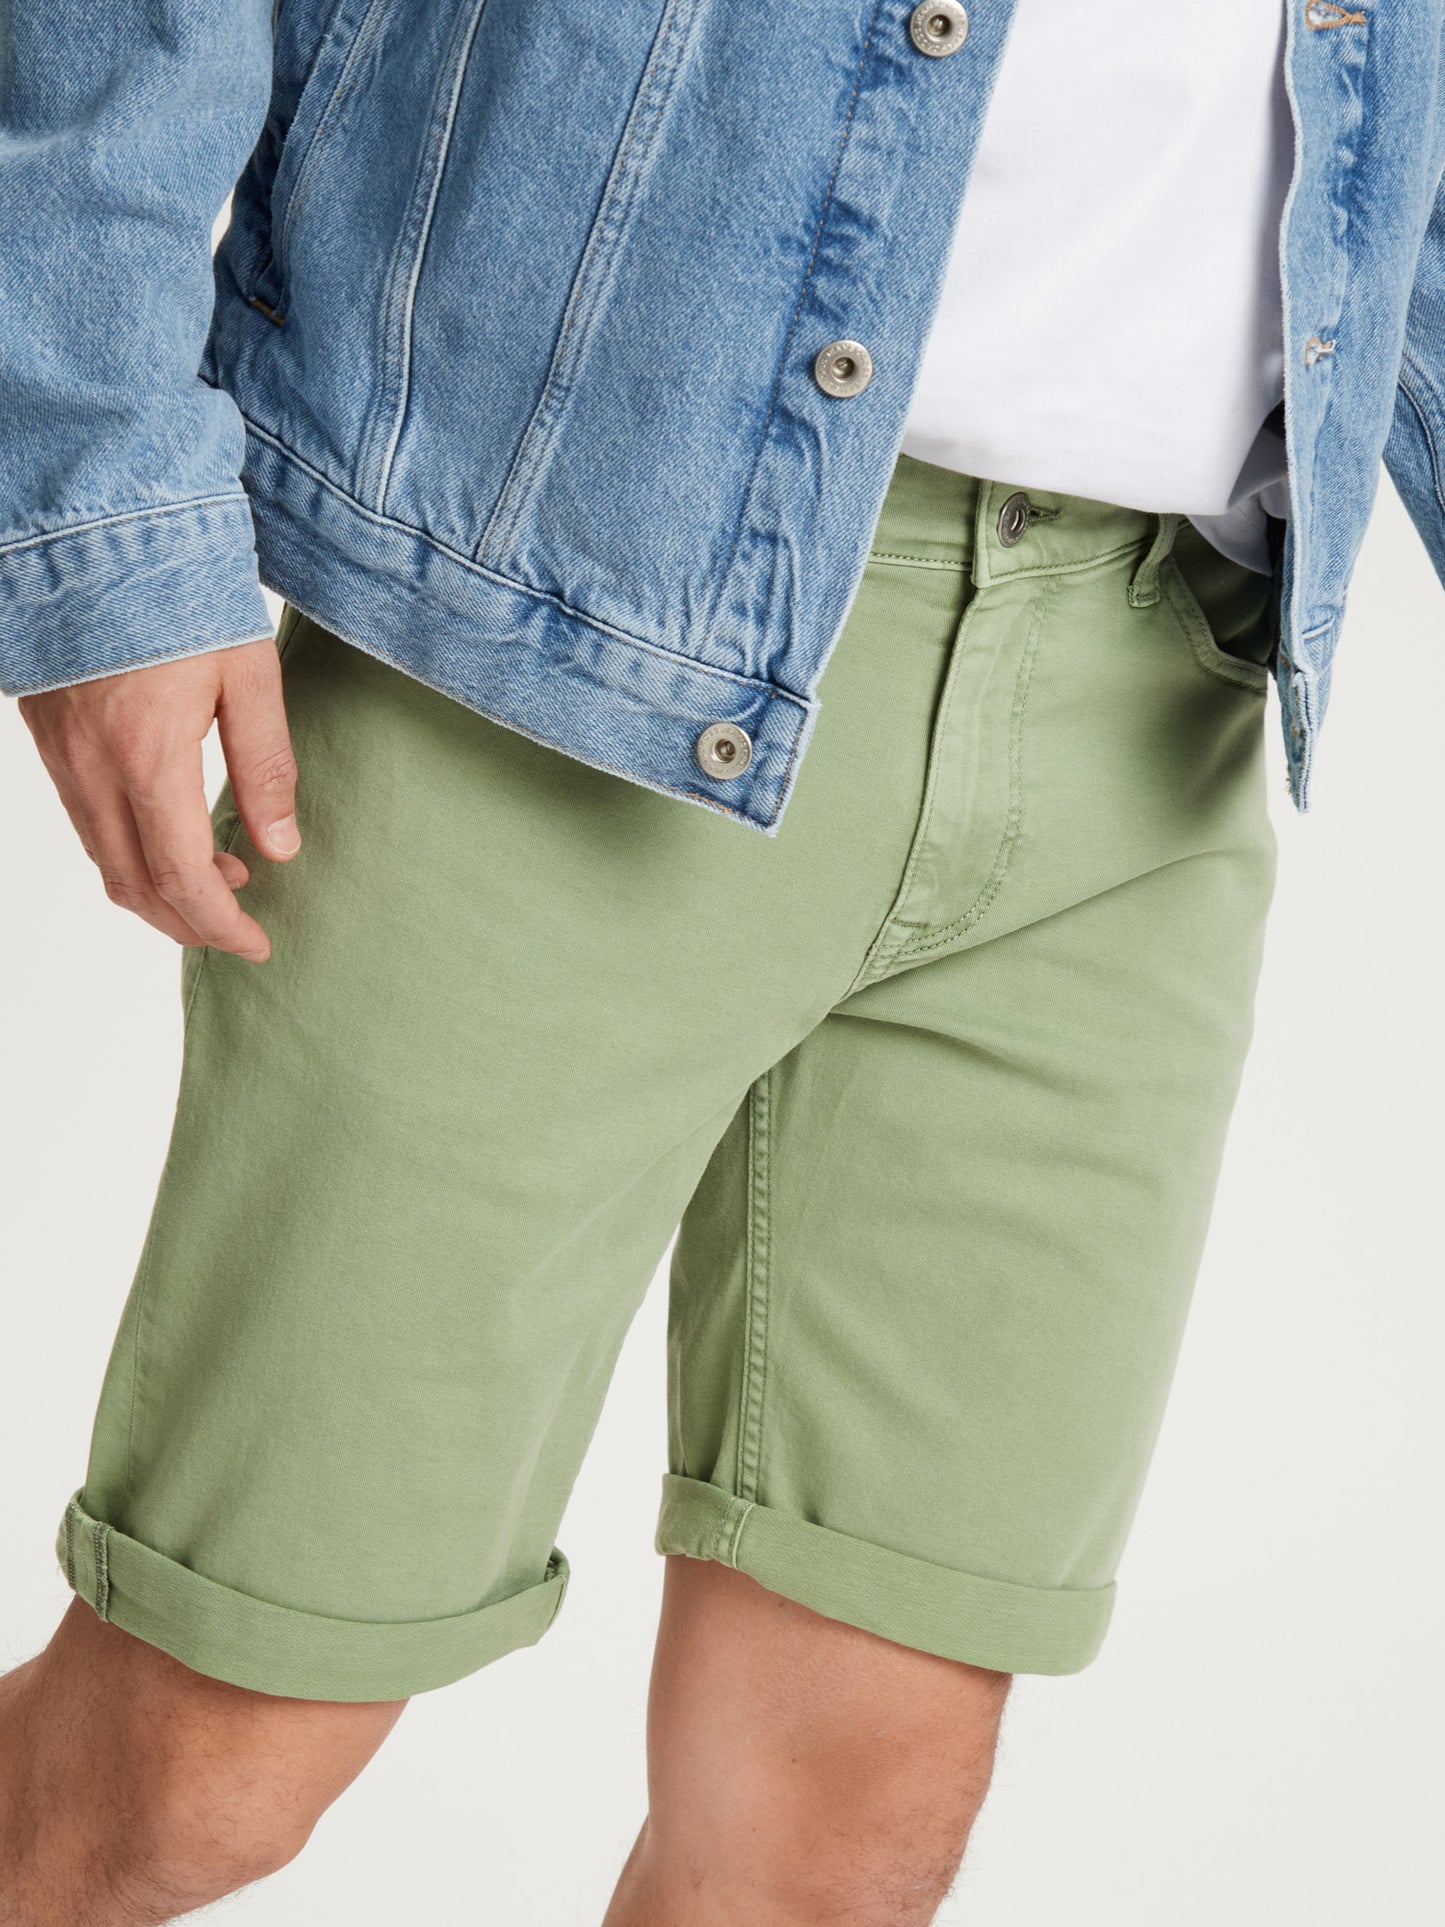 Leom men's shorts regular fit mint